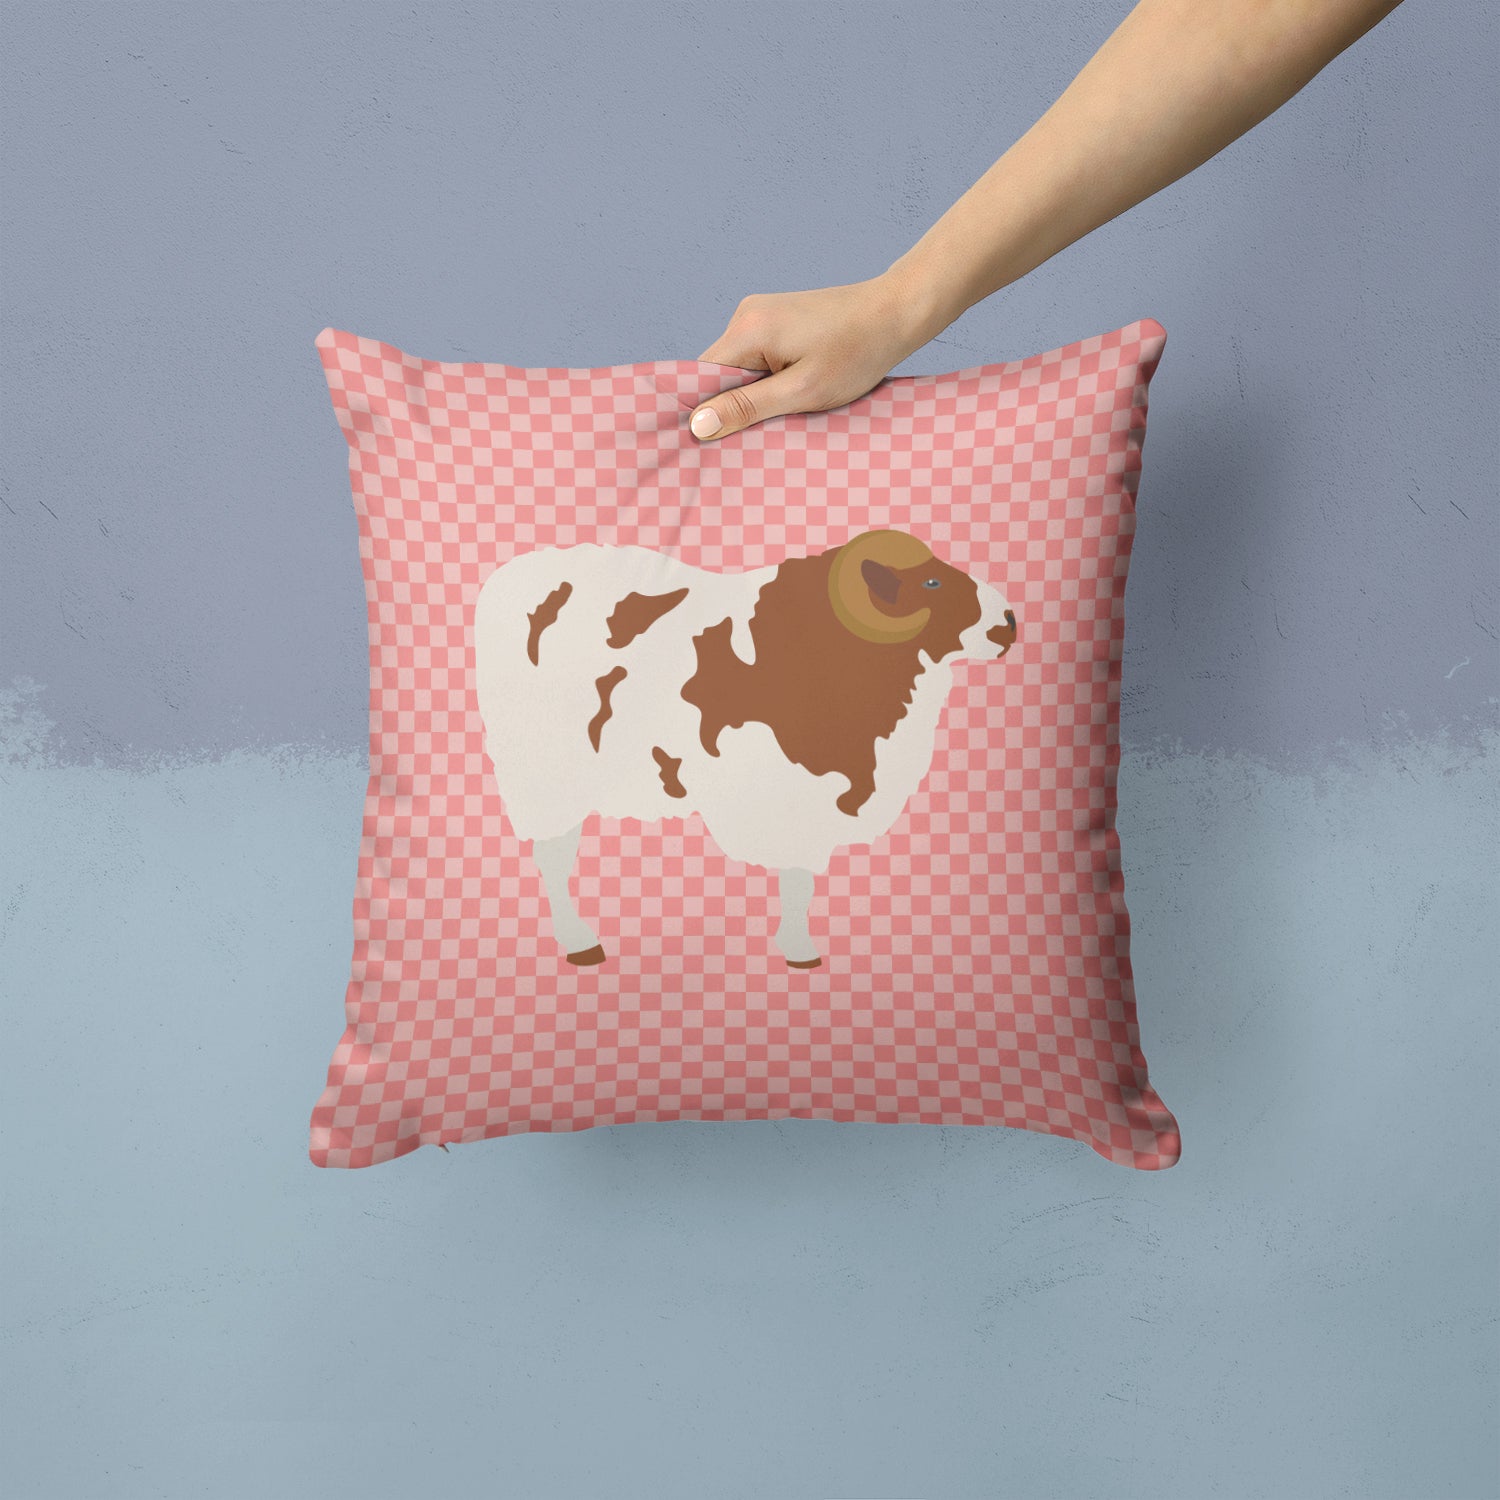 Jacob Sheep Pink Check Fabric Decorative Pillow BB7975PW1414 - the-store.com